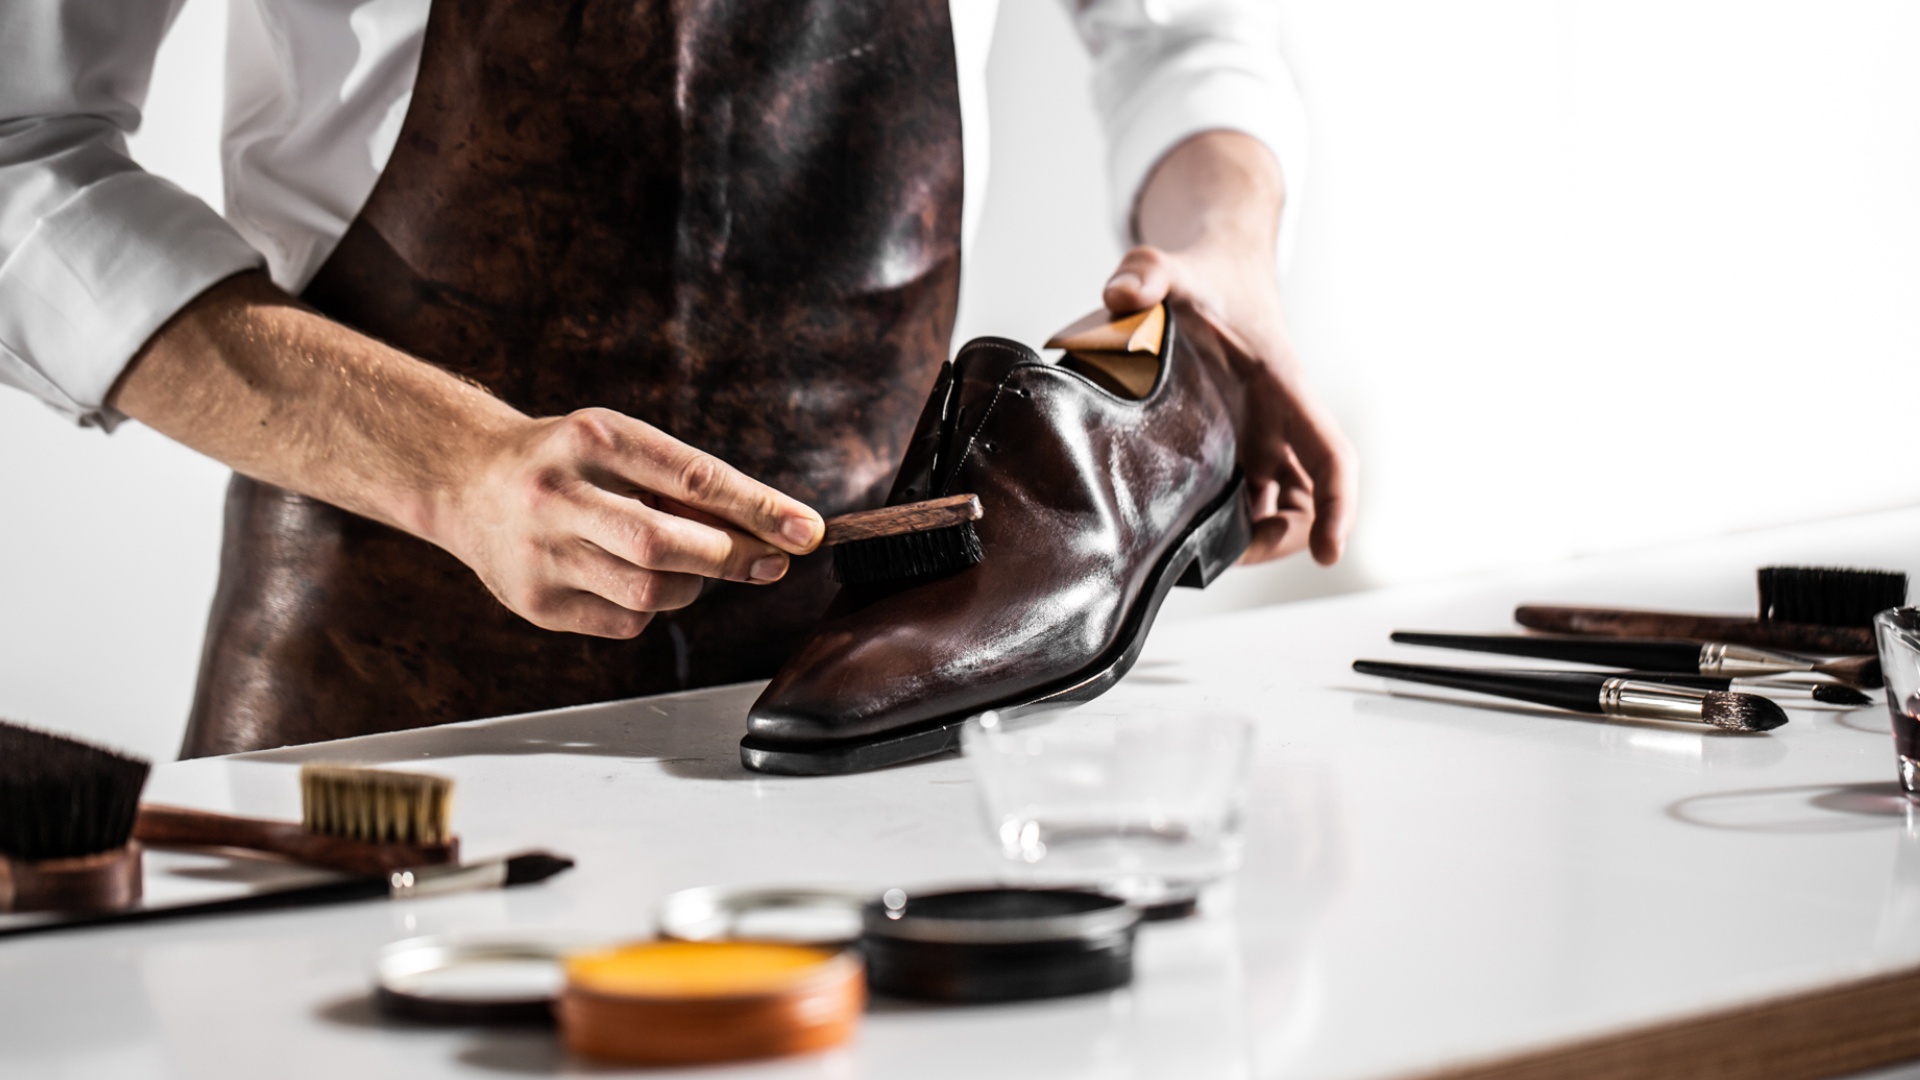 BERLUTI Monaco: bespoke shoes and leather goods in Monaco